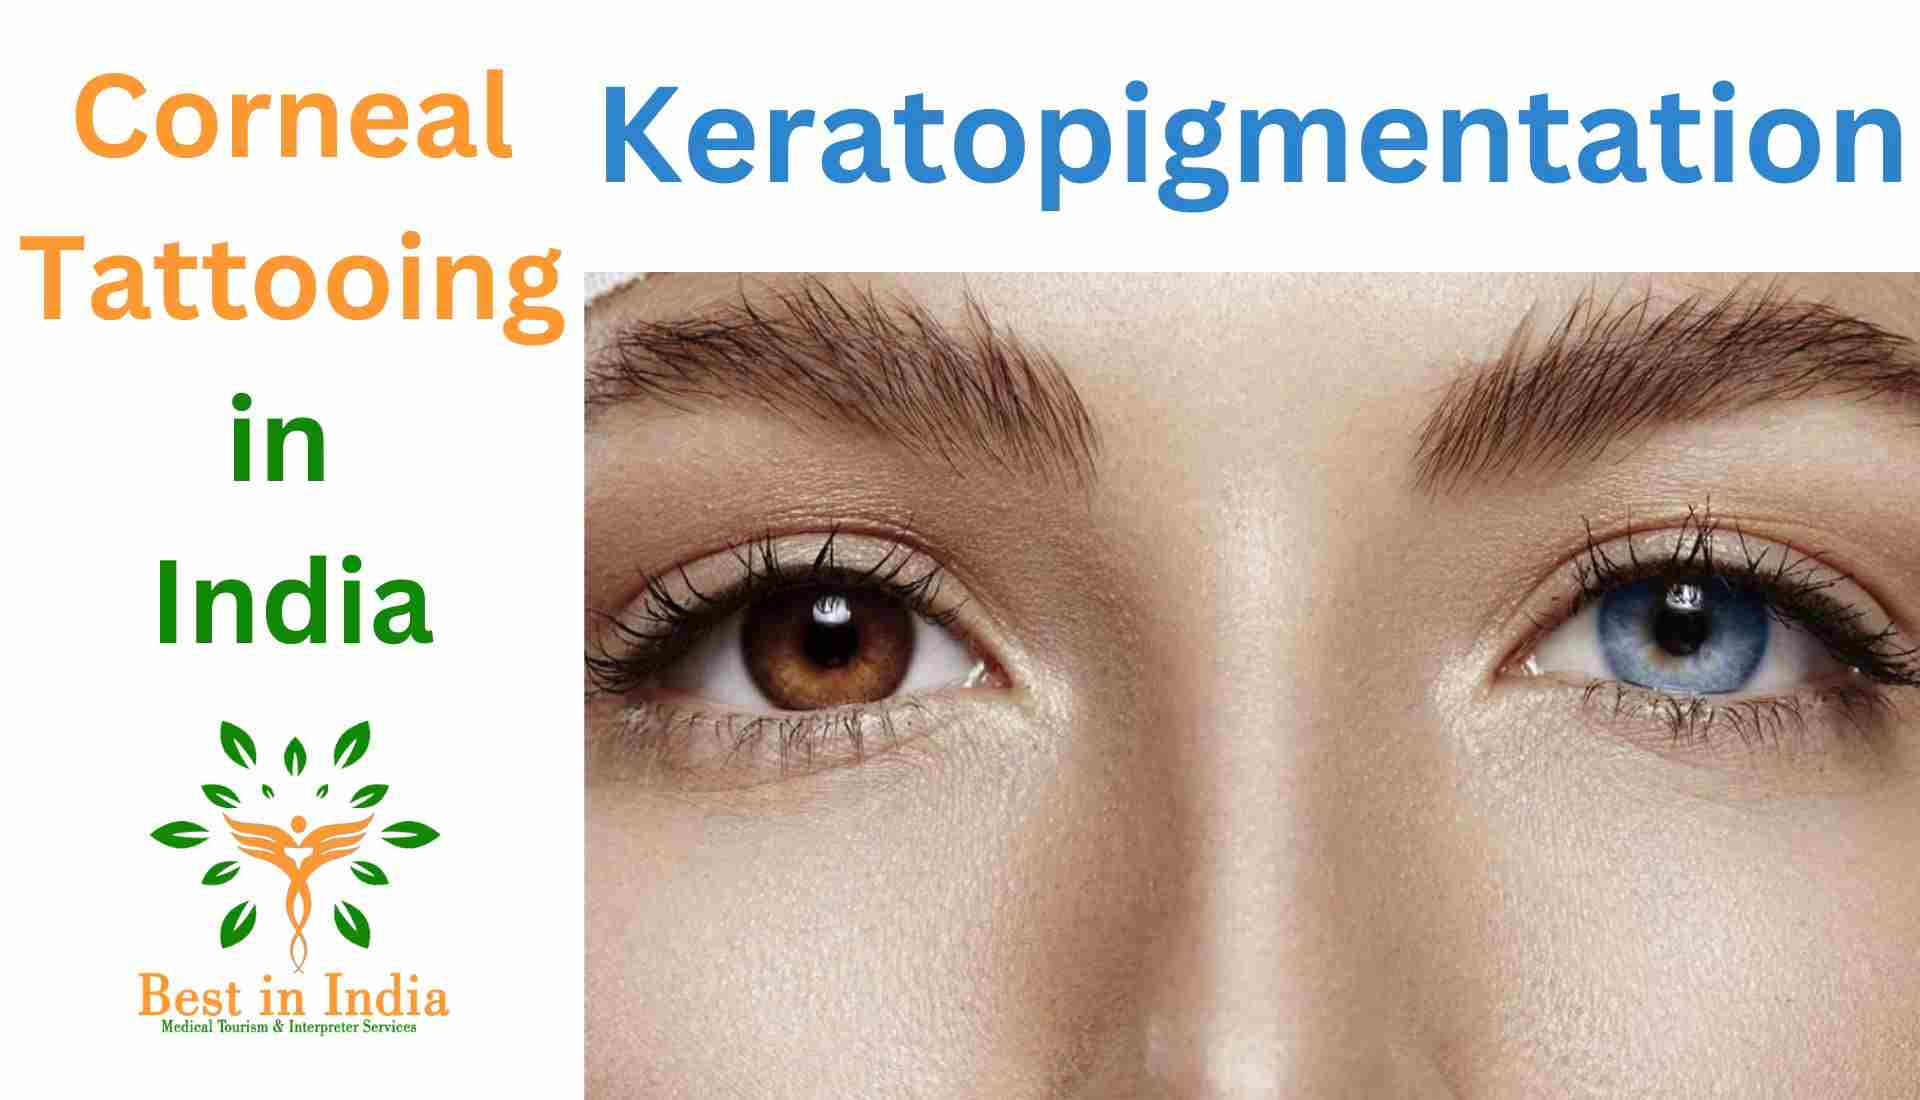 Keratopigmentation or Corneal Tattoo: Eye Color Change Surgery in India